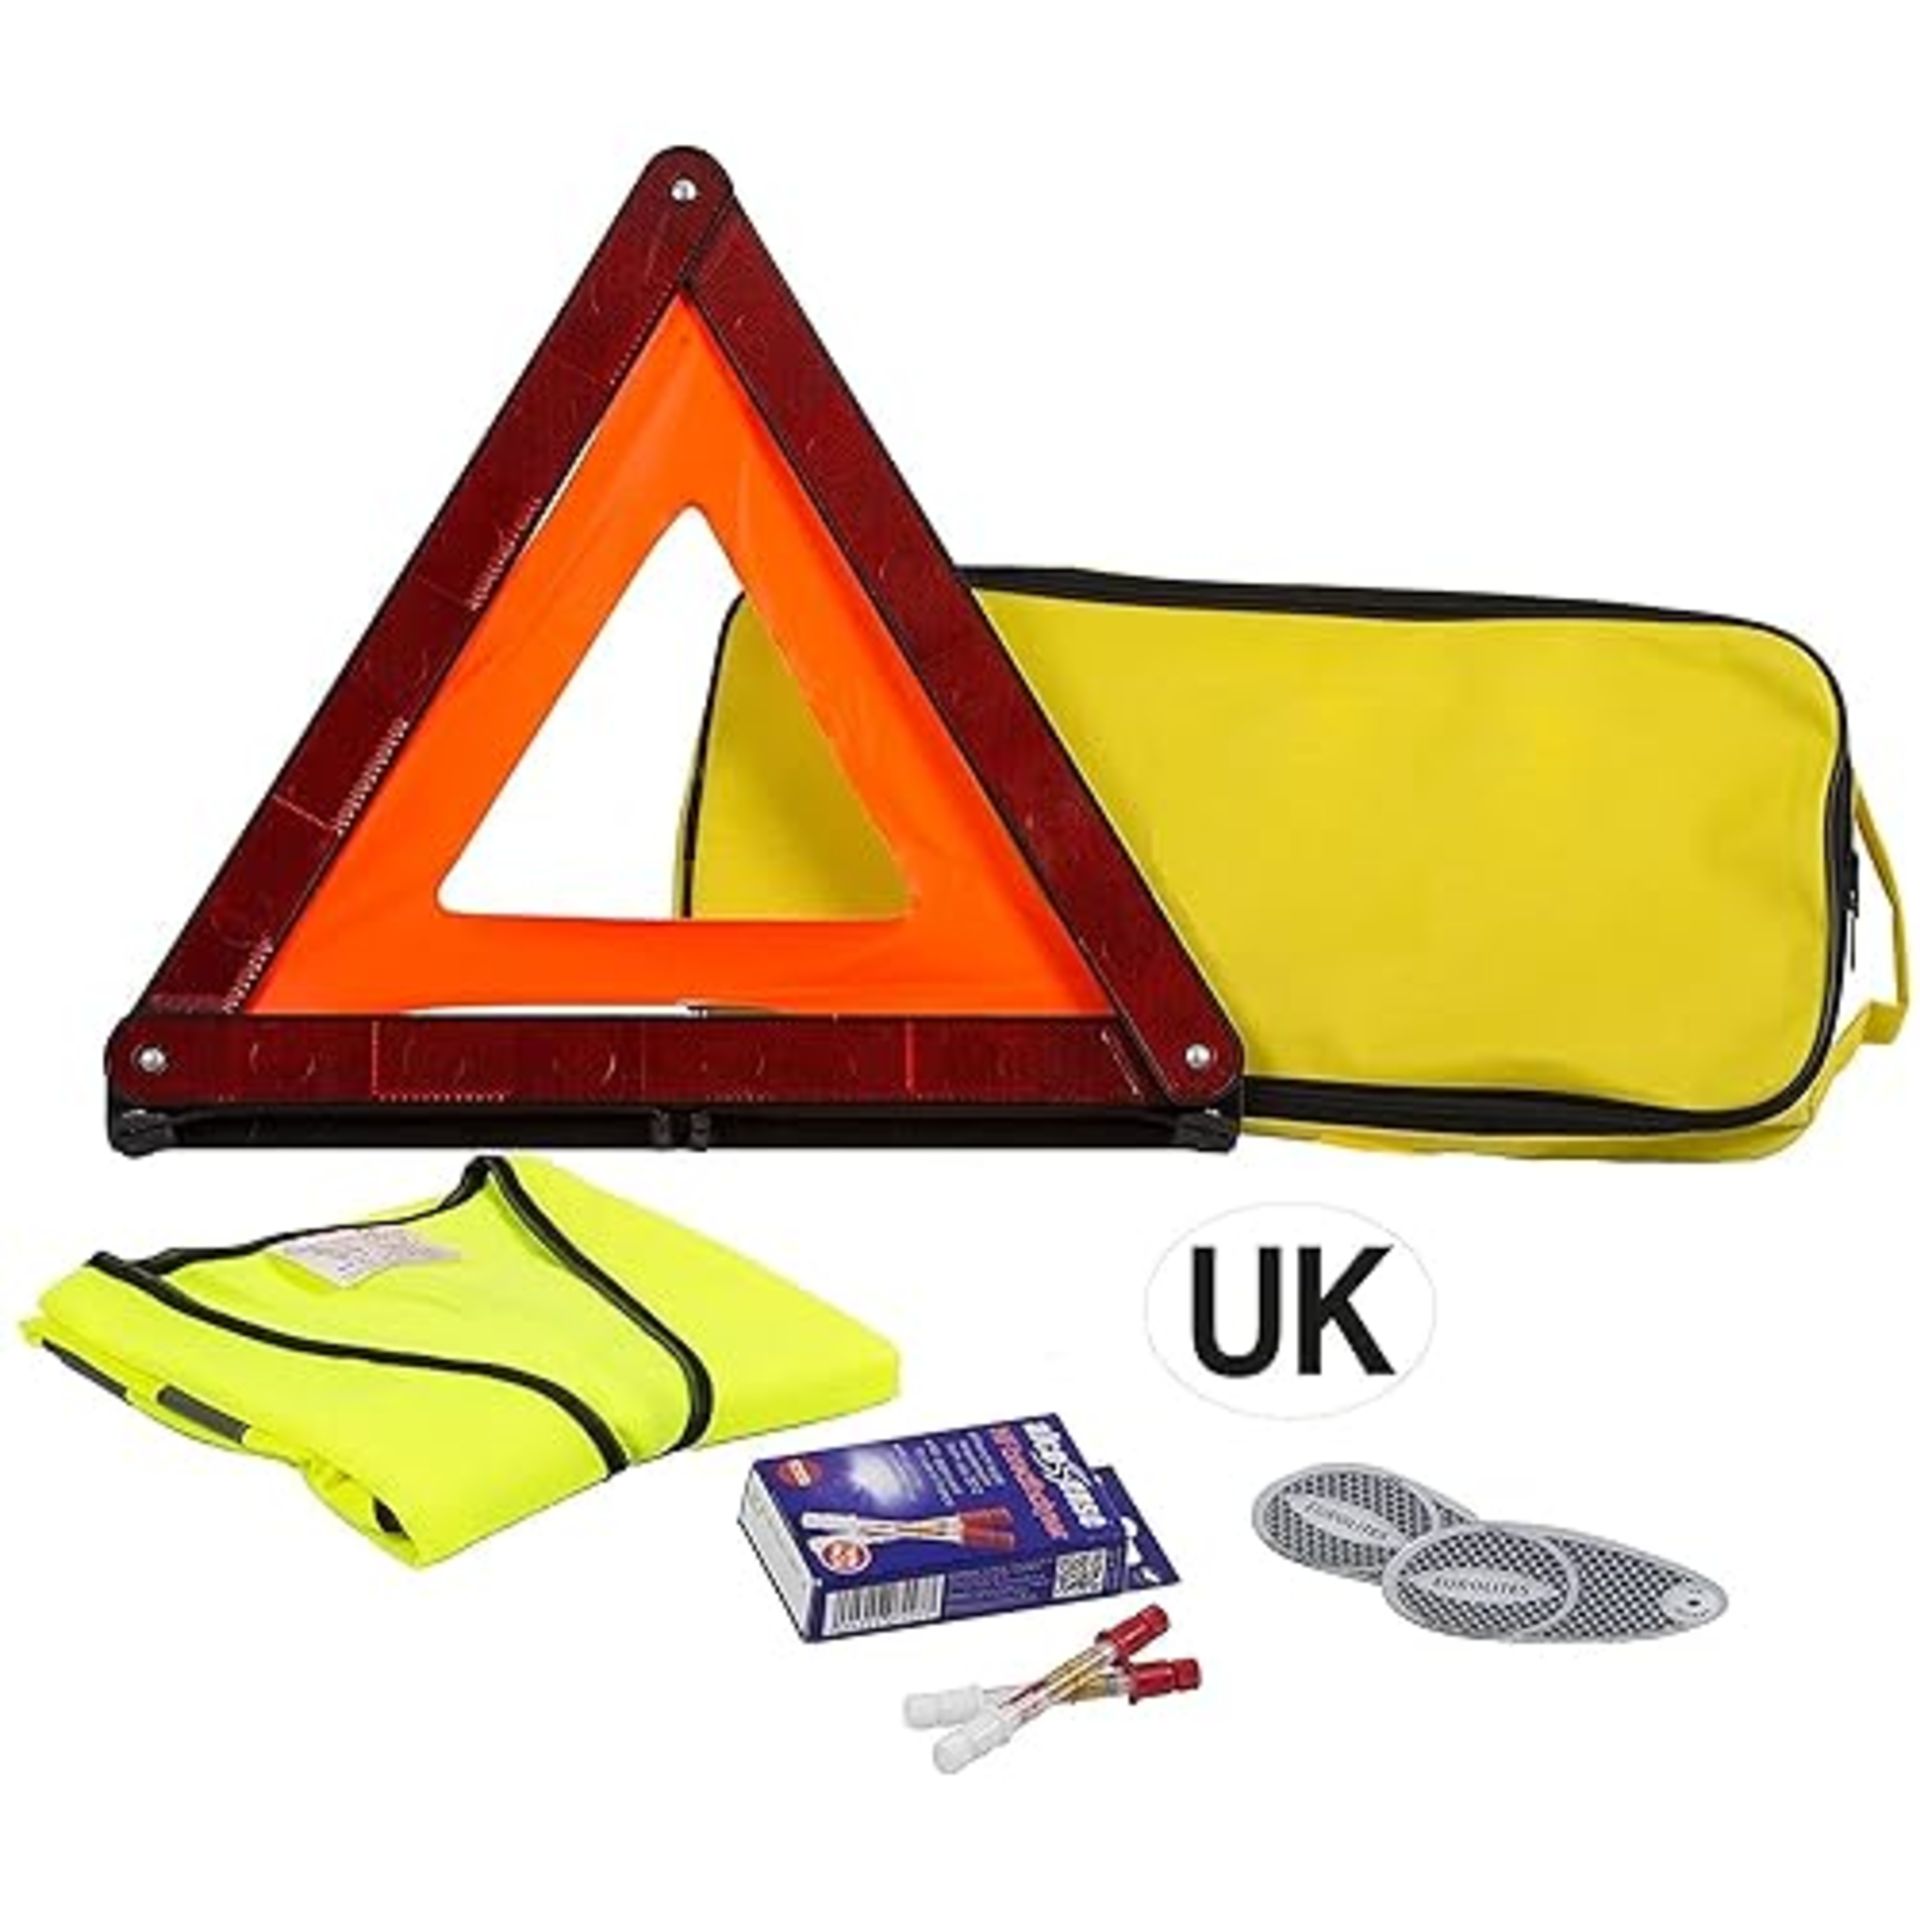 AA French Travel Kit AA5465 - Breathalysers, Warning Triangle, UK Badge, Headlamp Beam Converters, 